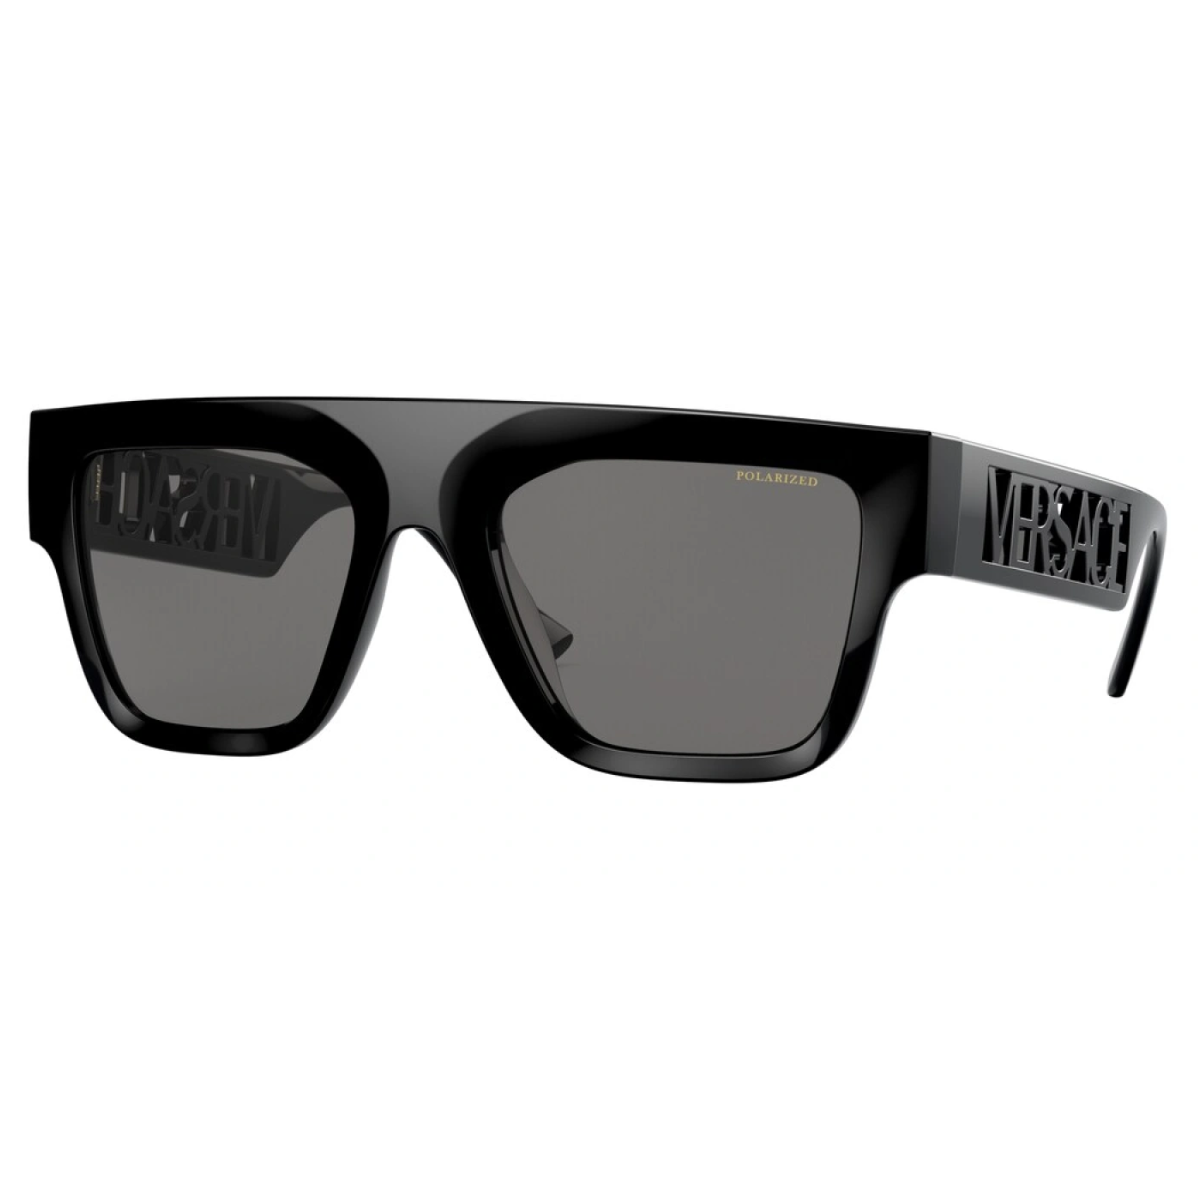 ""Get the latest Versace 4361 GB1/87 sunglasses at Optorium. Black and gold frame, grey lenses. Shop now for high-end designer sunglasses." OPTORIUM"